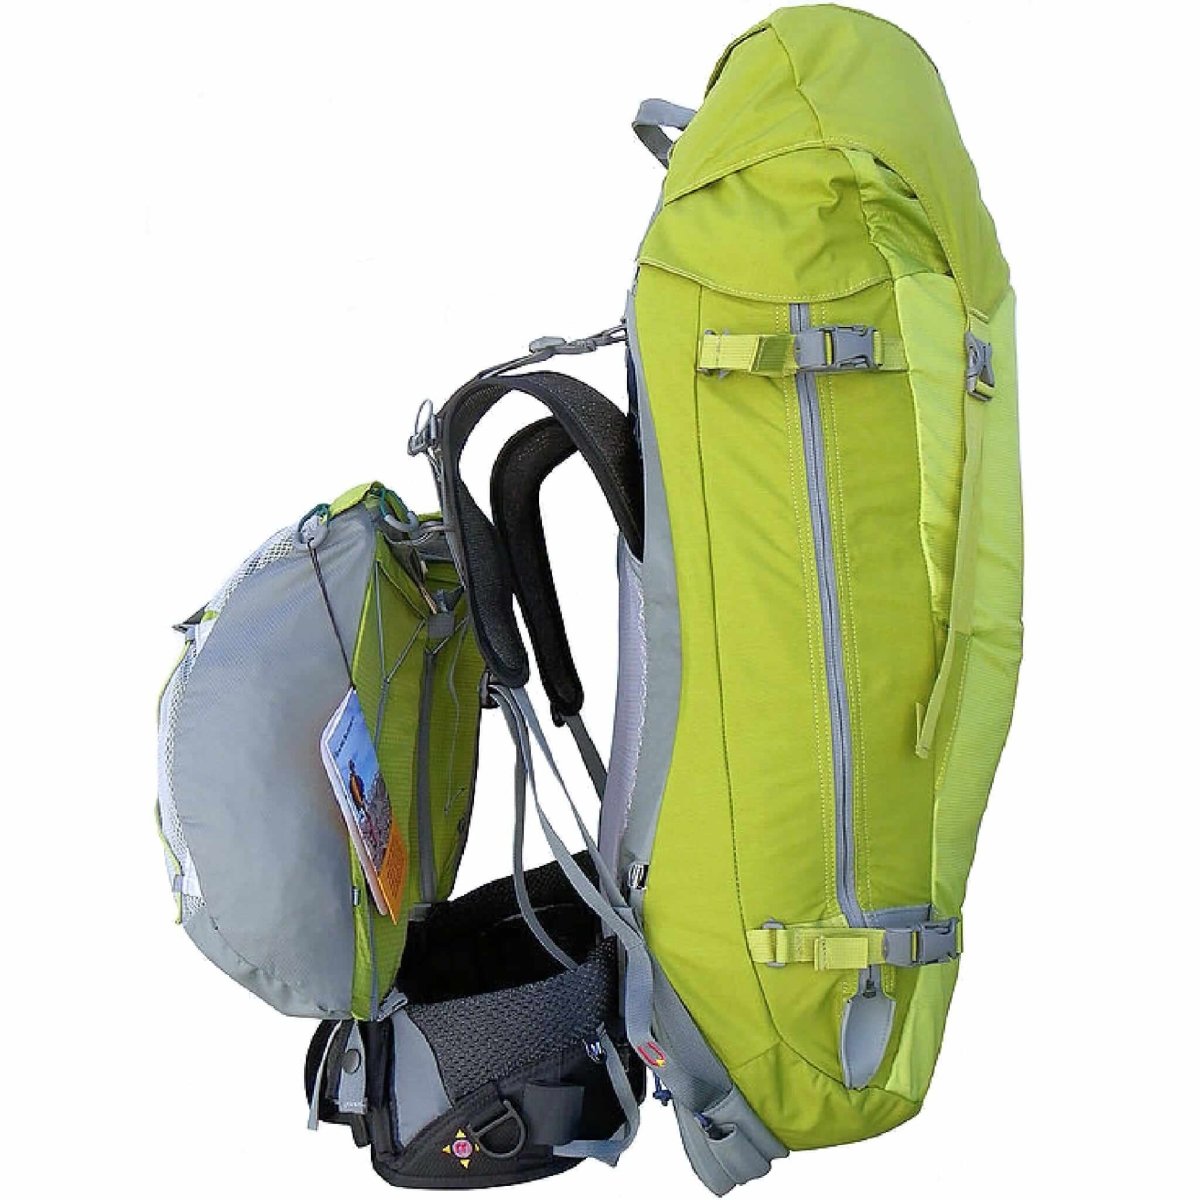 57 or 65 Liter Aarn Guiding Light Backpack - Light Hiking Gear